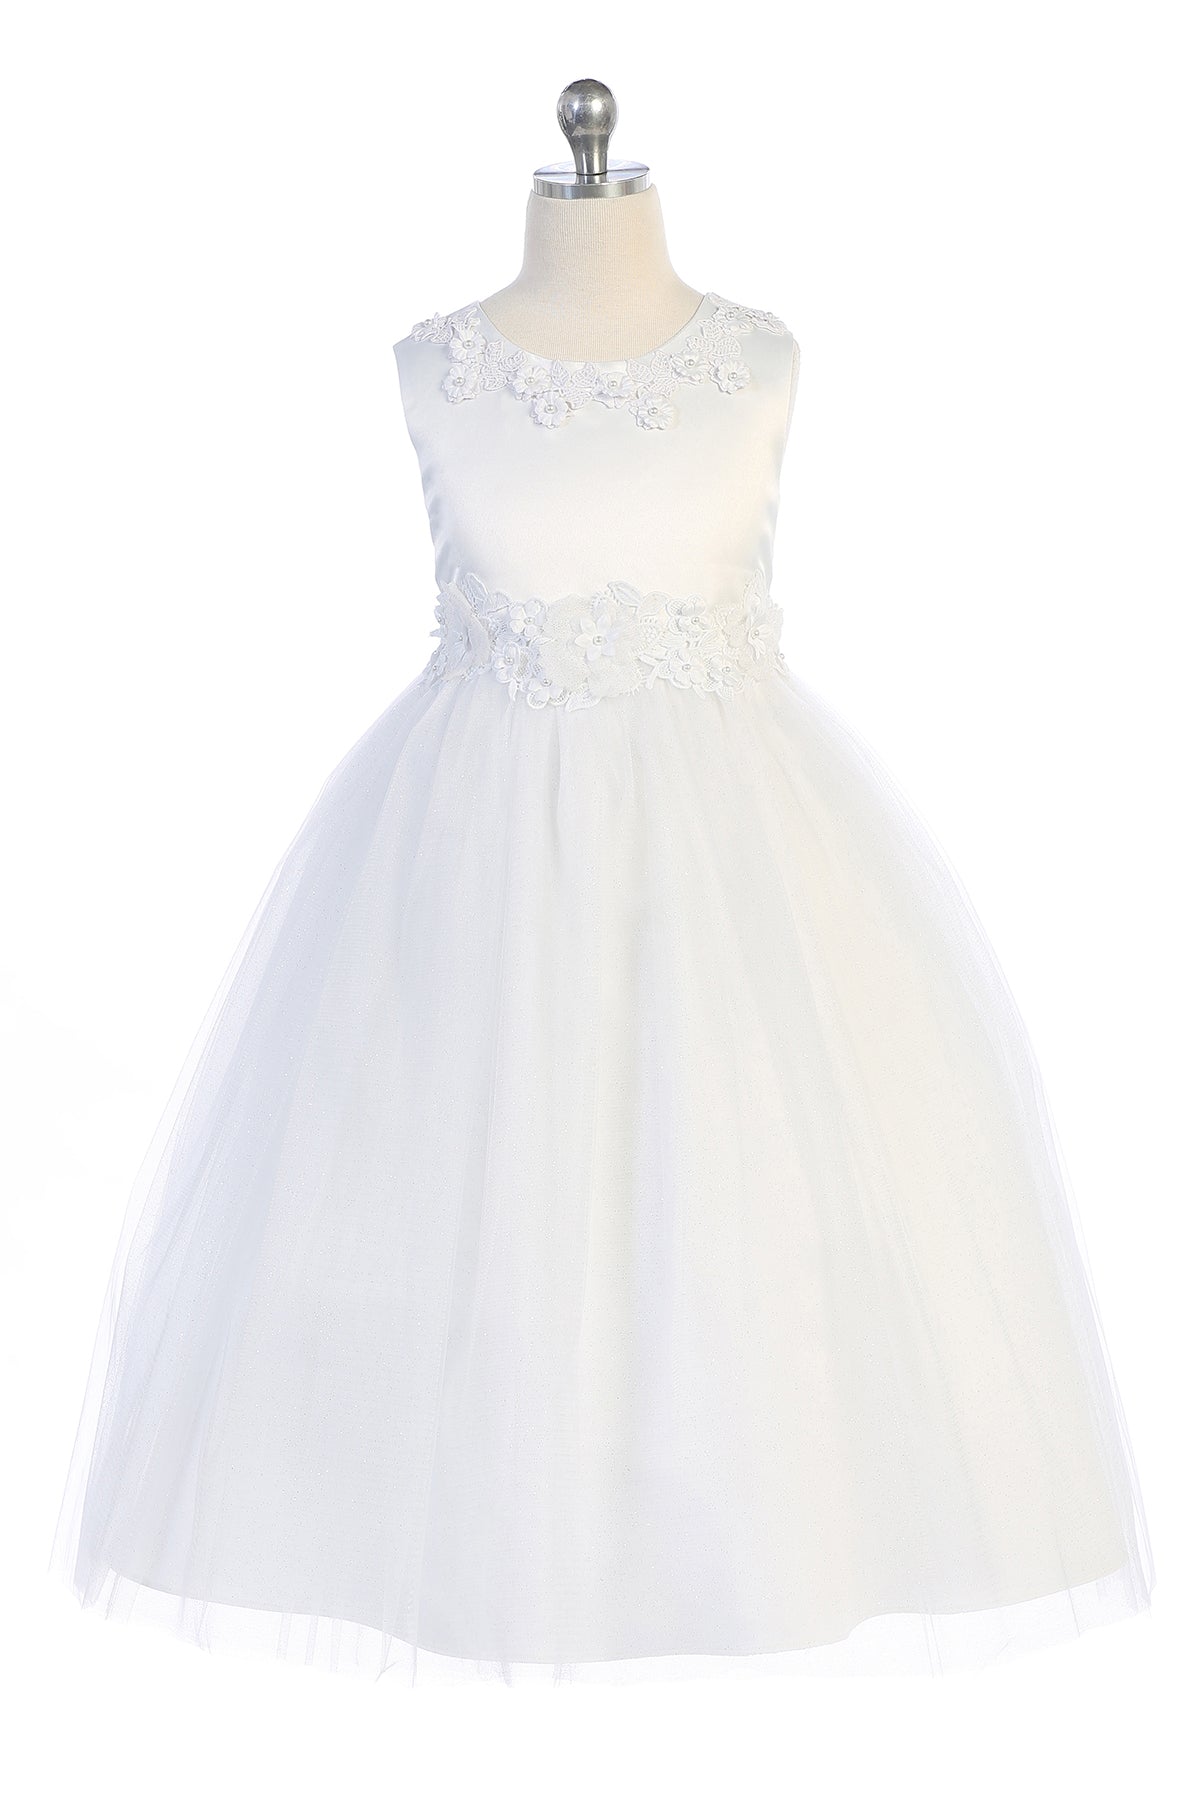 458-A Luxurious Princess Ballgown Dress w/ Floral Trim